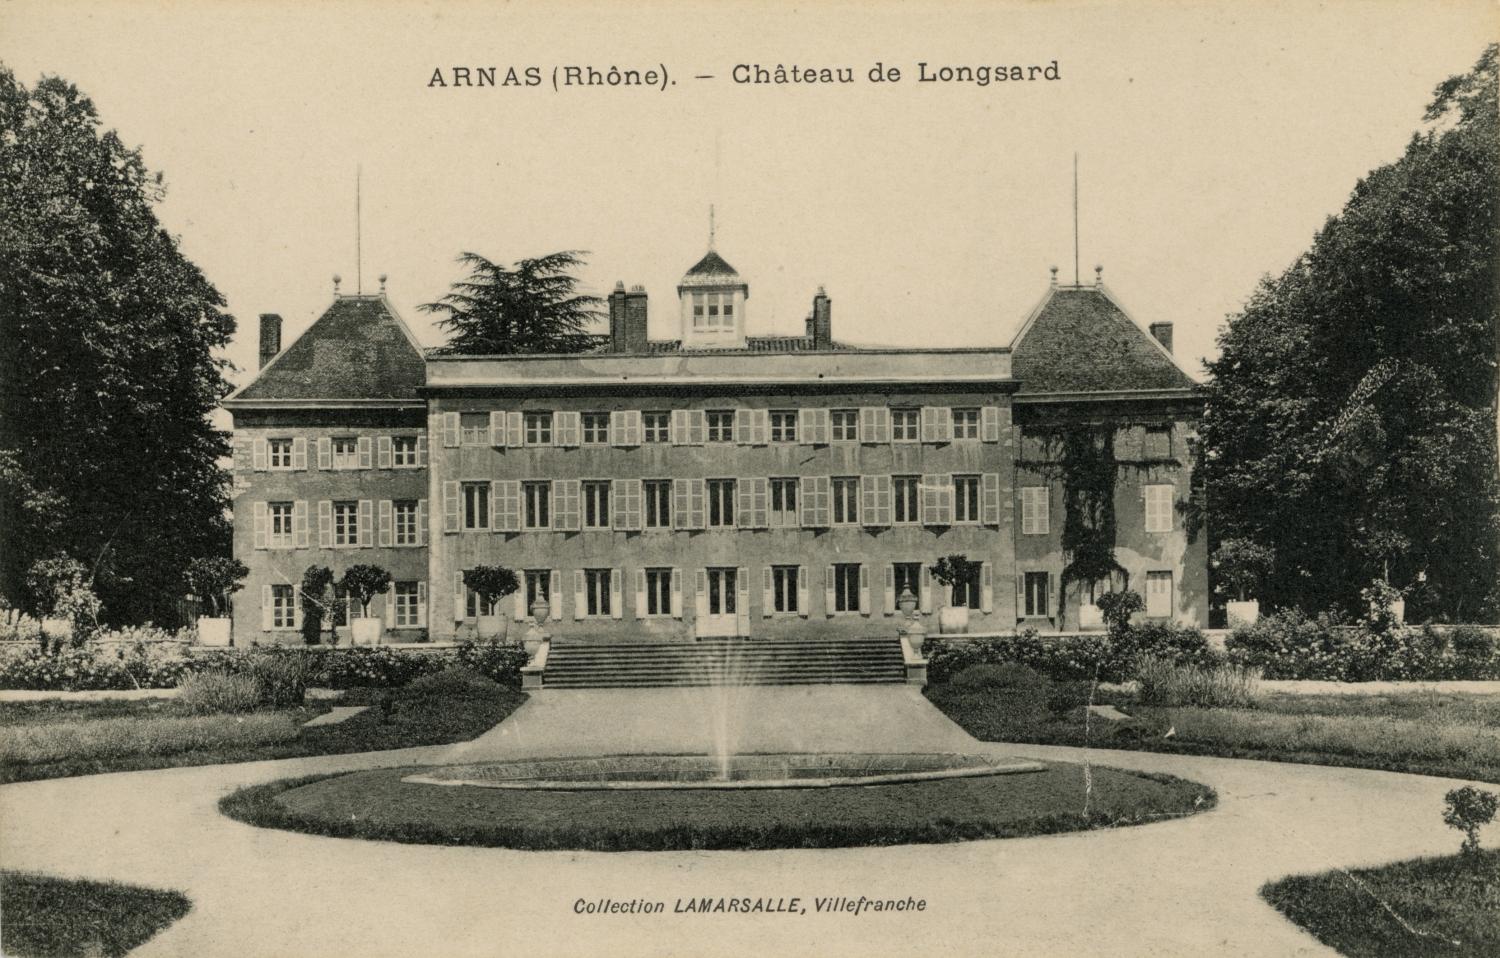 Arnas (Rhône). - Château de Longsard